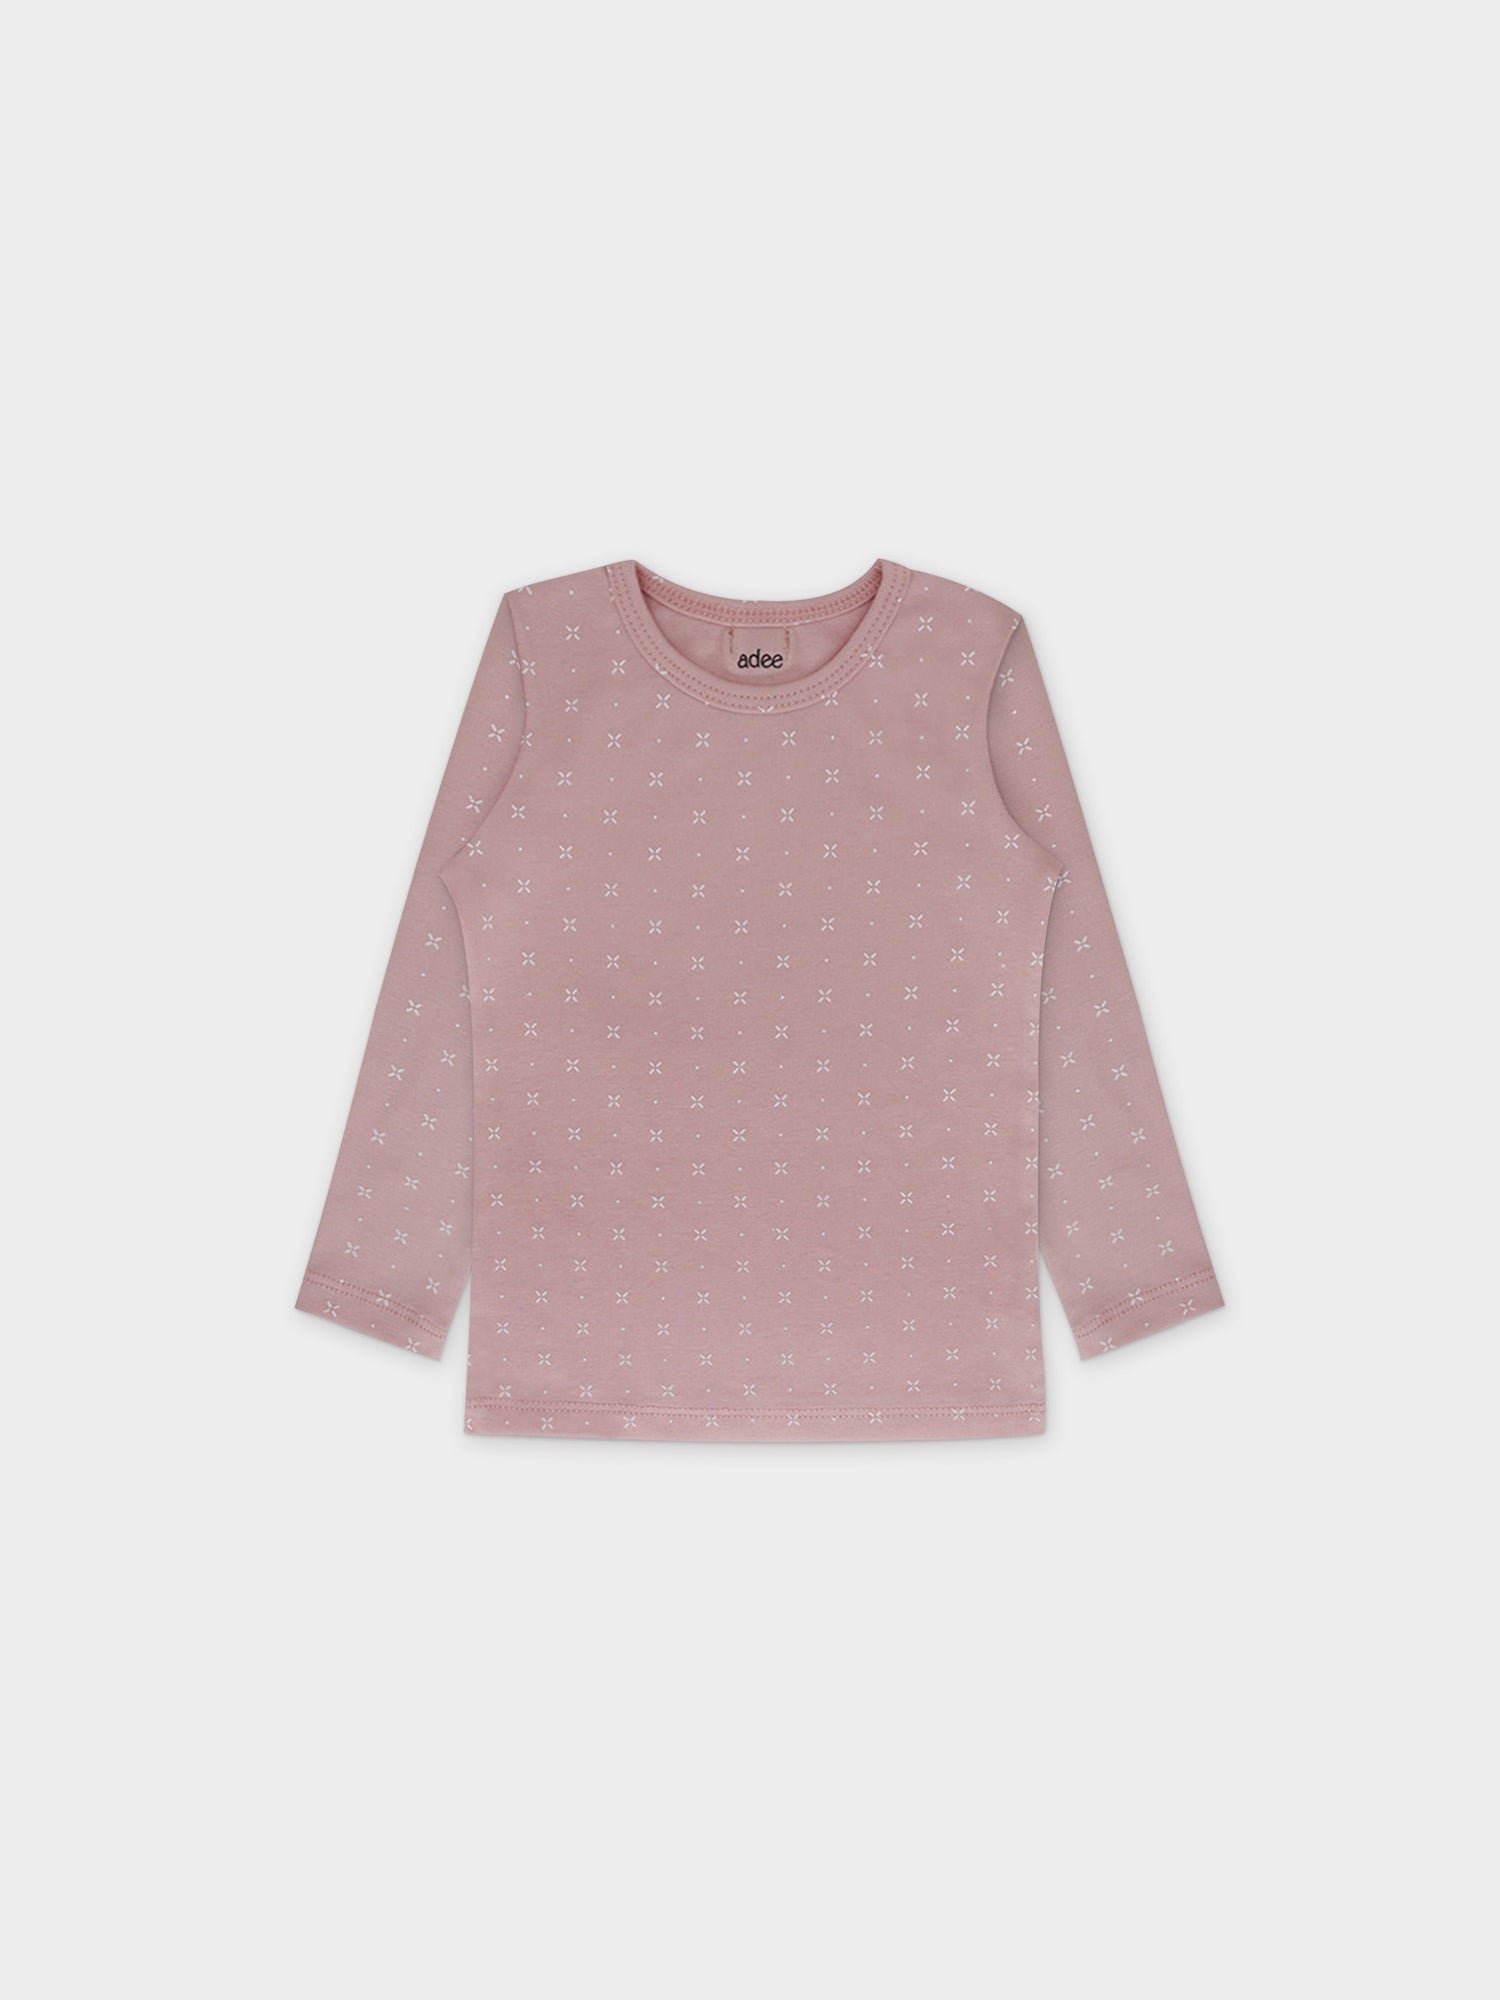 X Print Pajama-Pink